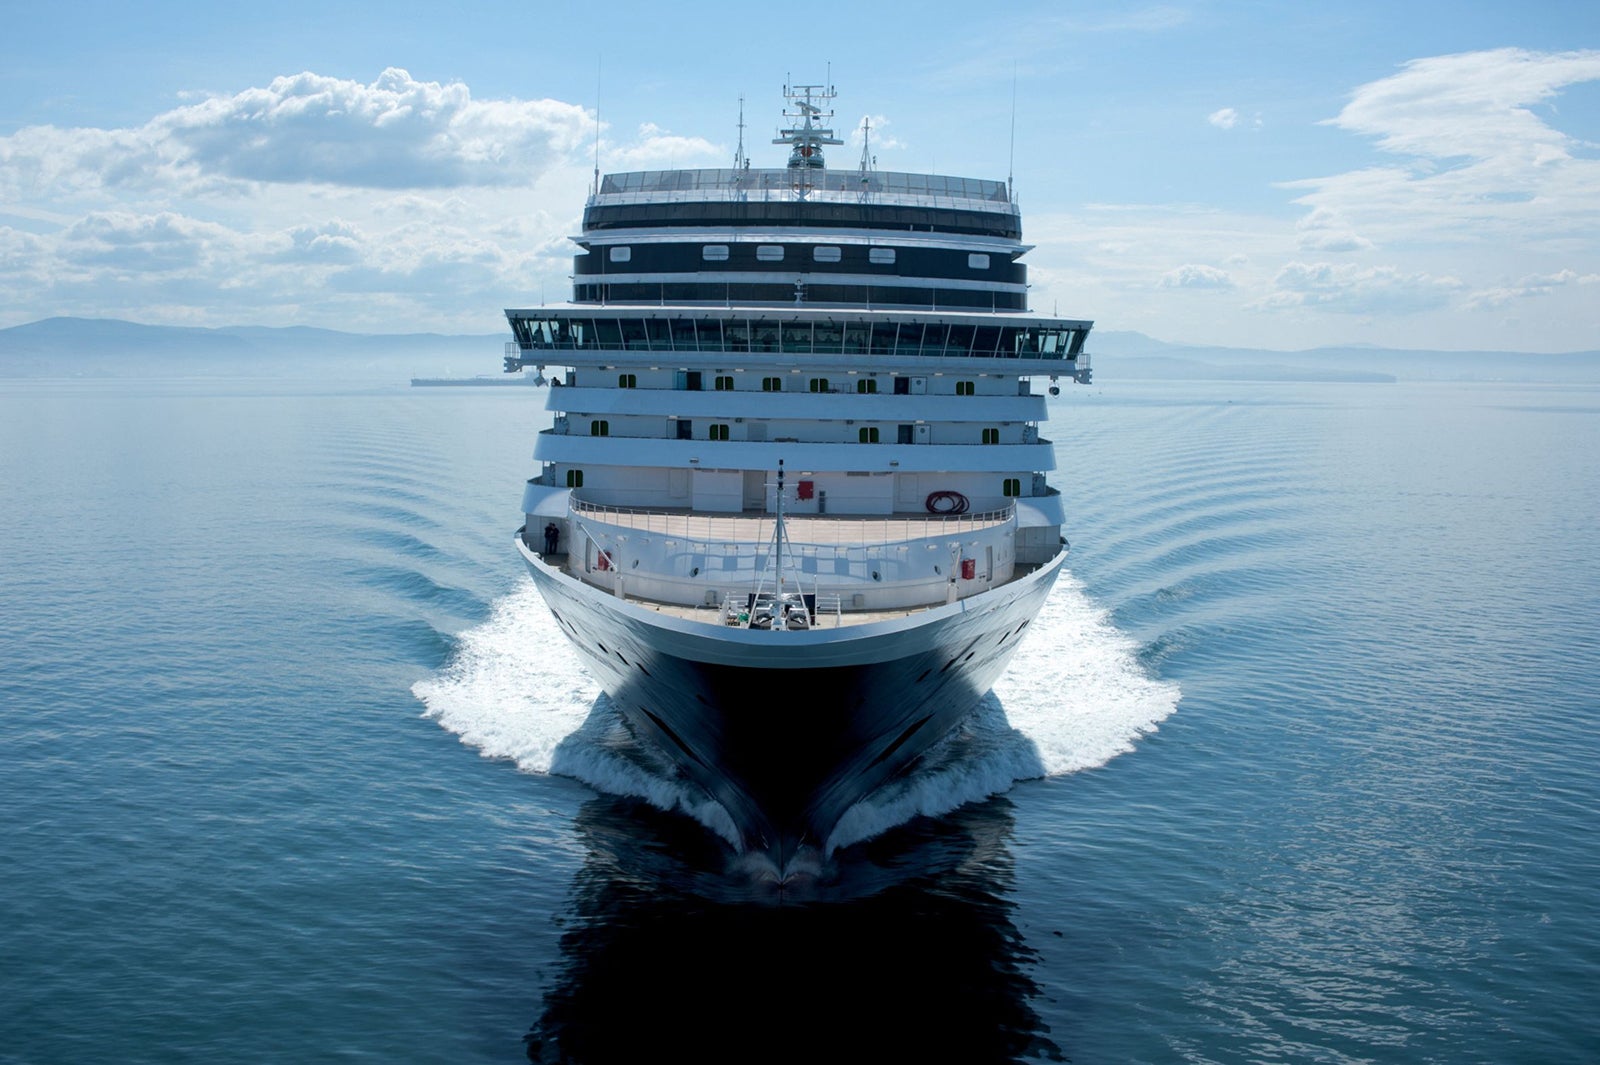 holland cruise travel insurance